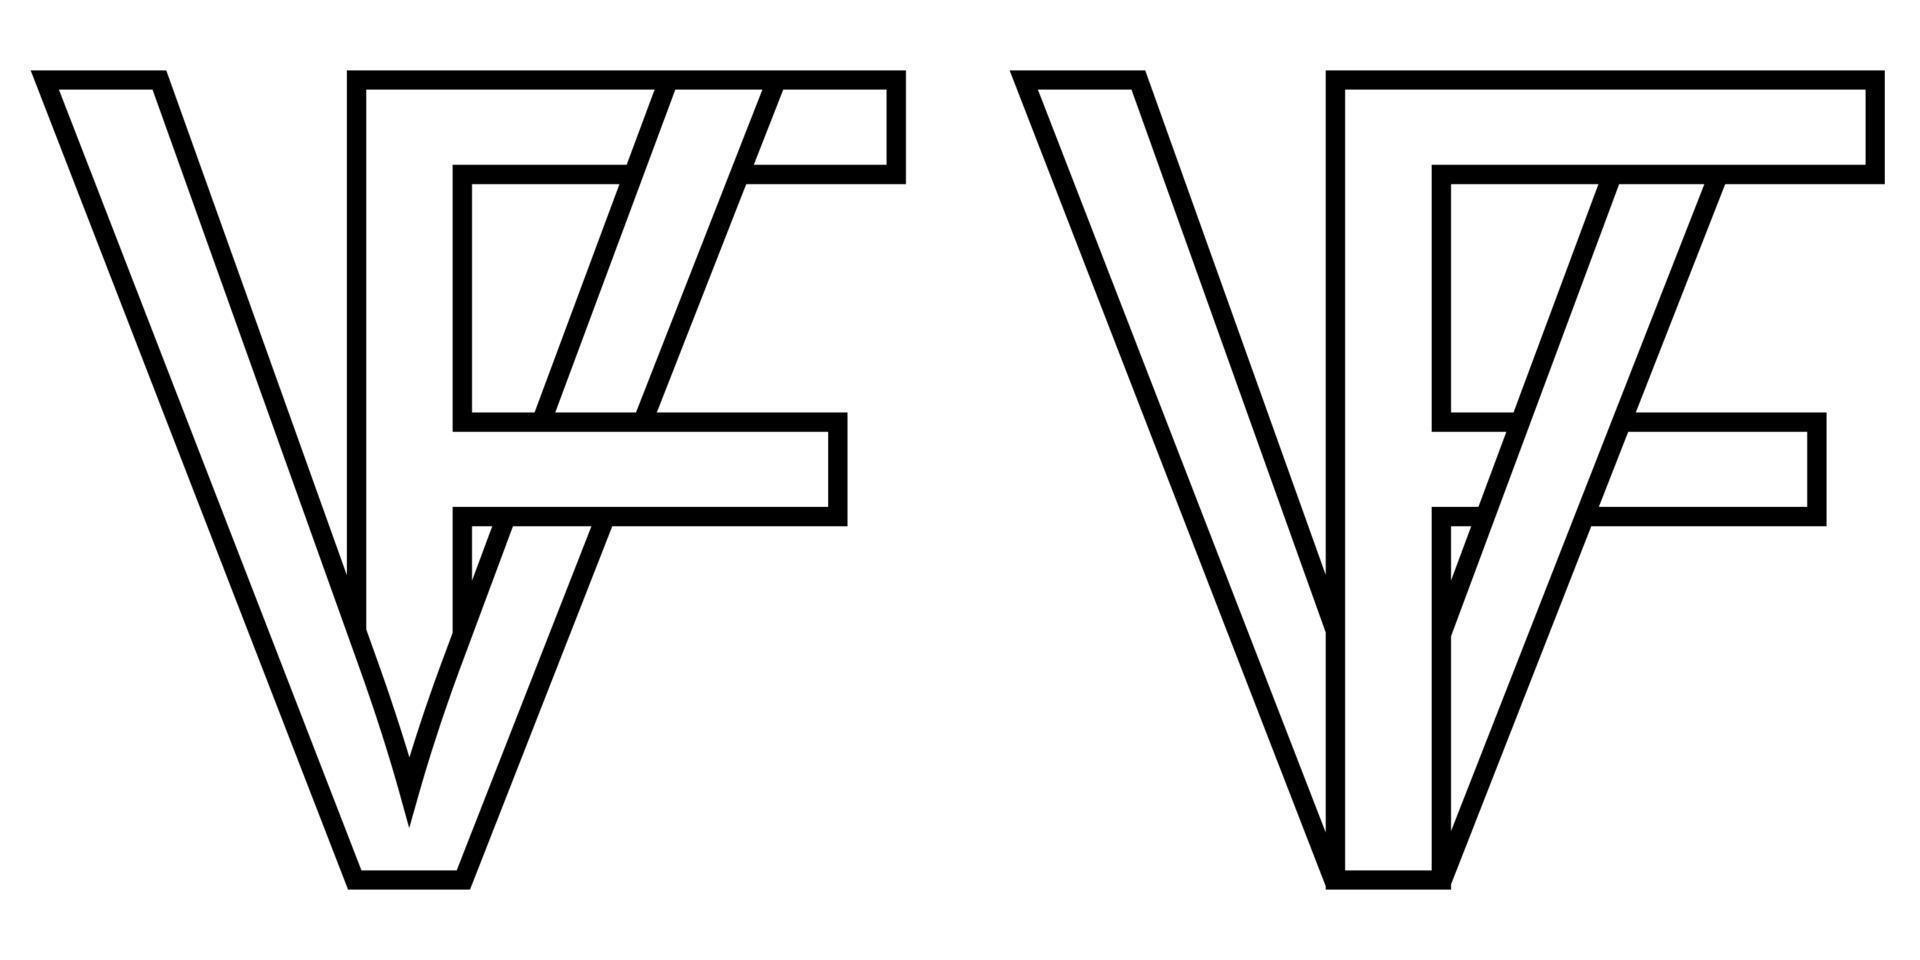 logo cartello fv, vf icona cartello interlacciato lettere v, f vettore logo vf, fv primo capitale lettere modello alfabeto v f